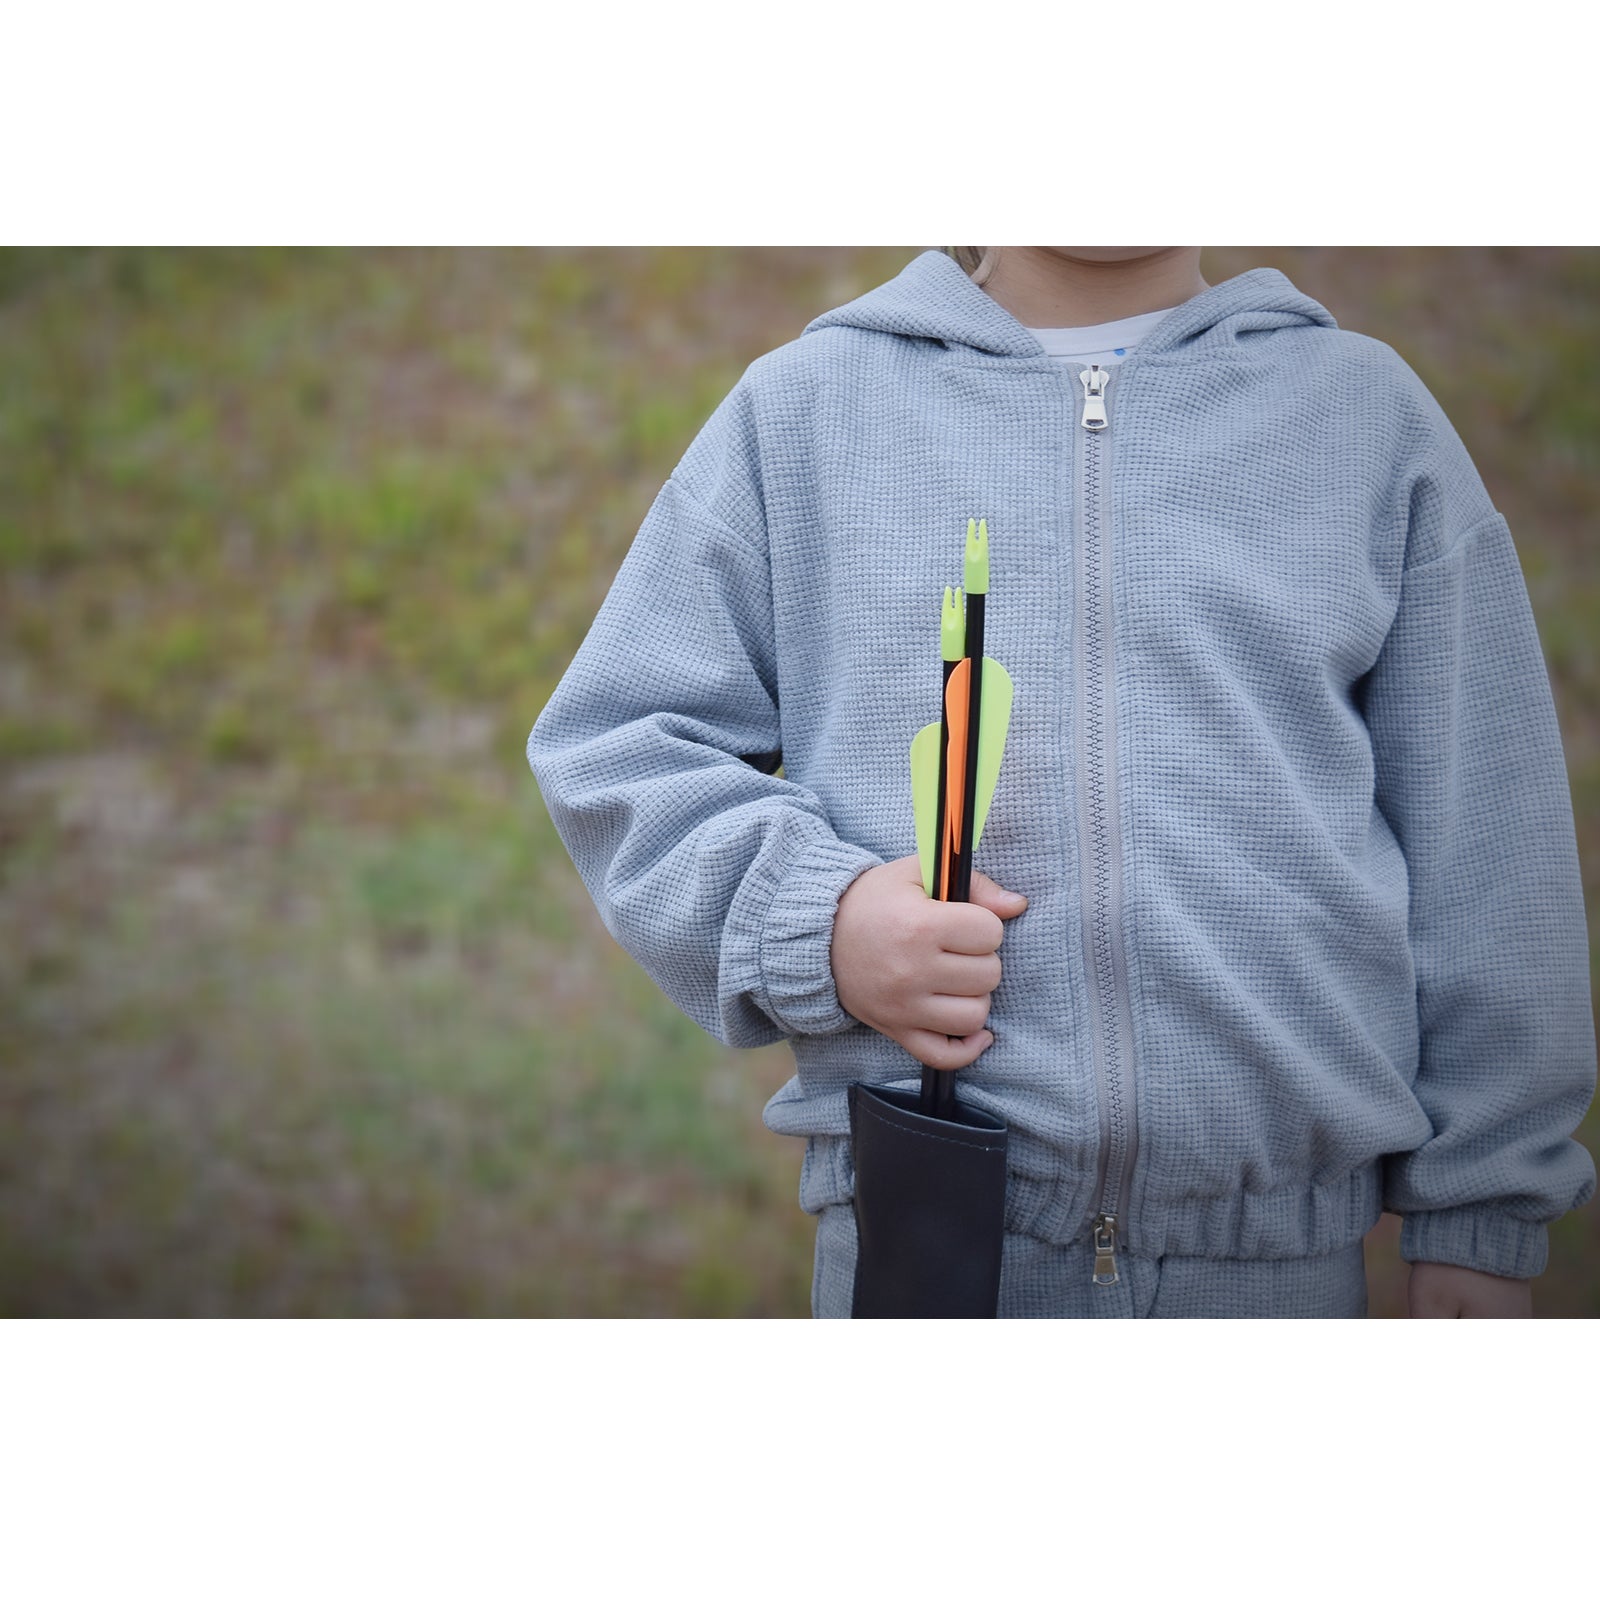 Recurve Bow and Arrow Set Outdoor for Children Junior Archery Beginner